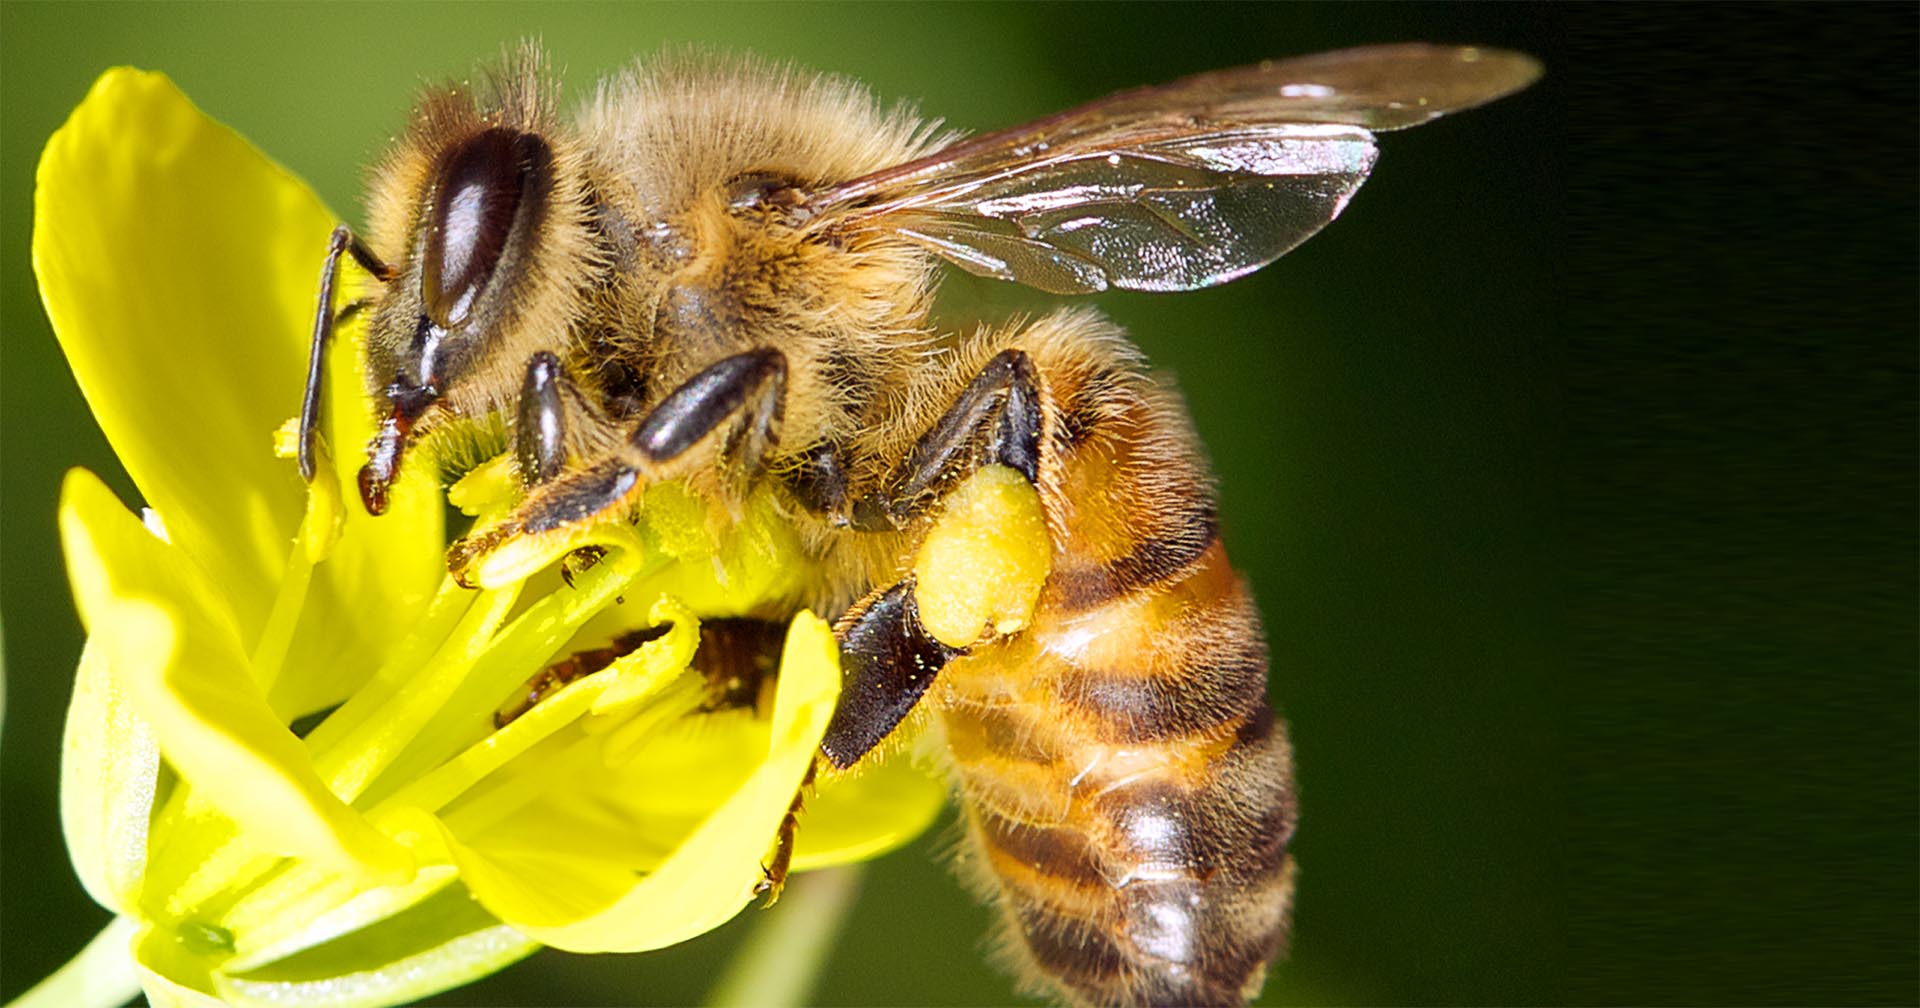 https://endangeredwild.life/wp-content/uploads/2020/03/biodiversity-project-bee-3-v2.jpg